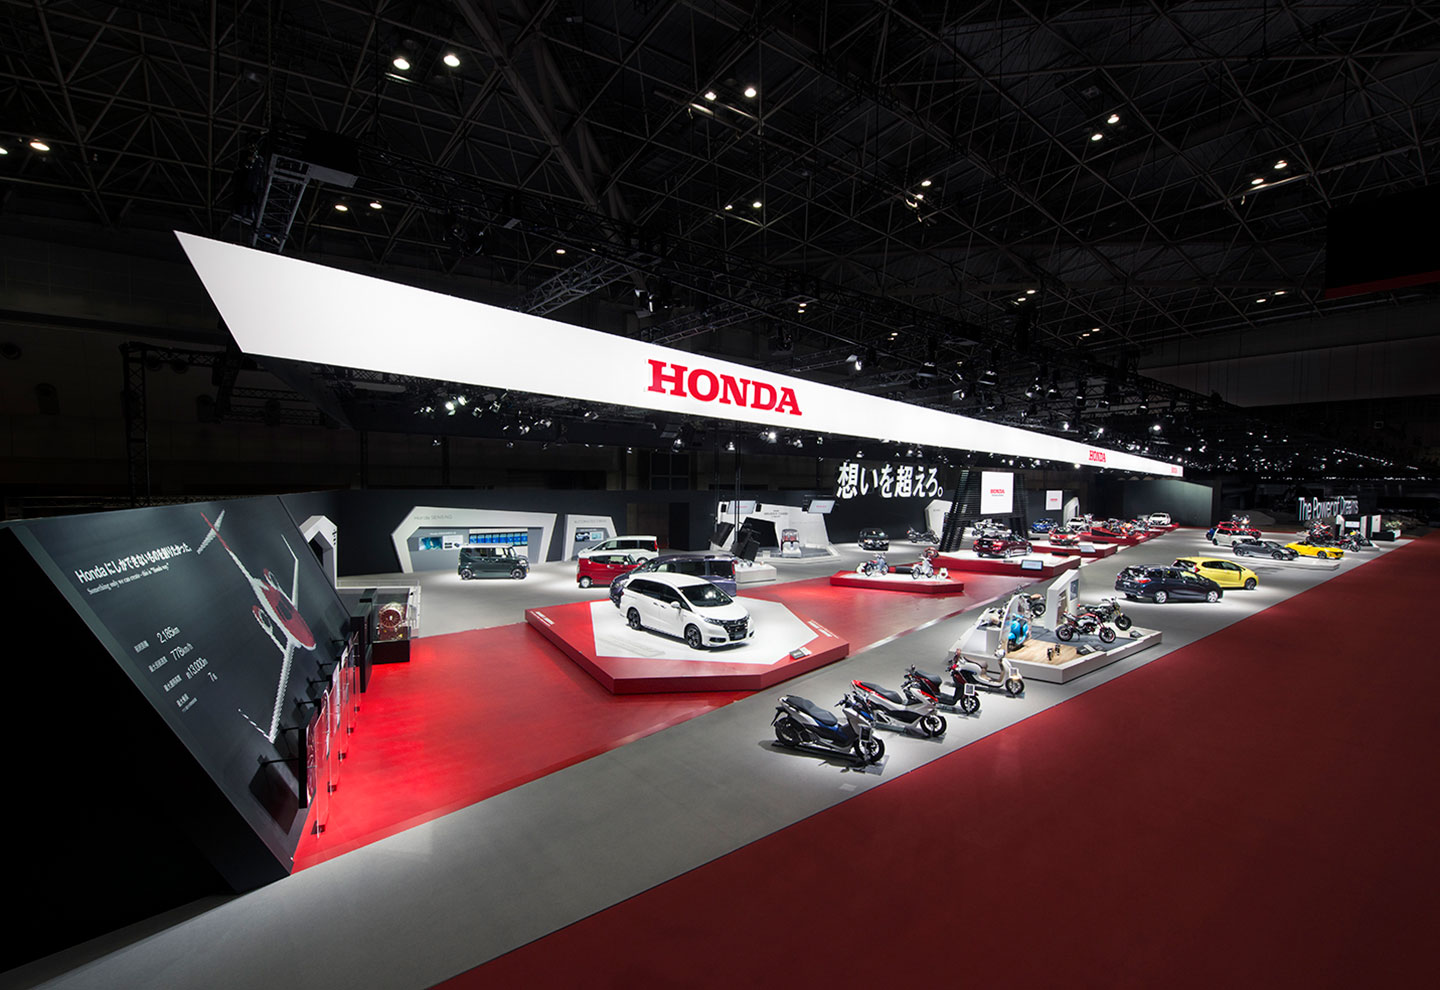 Tokyo Motor Show HONDA booth